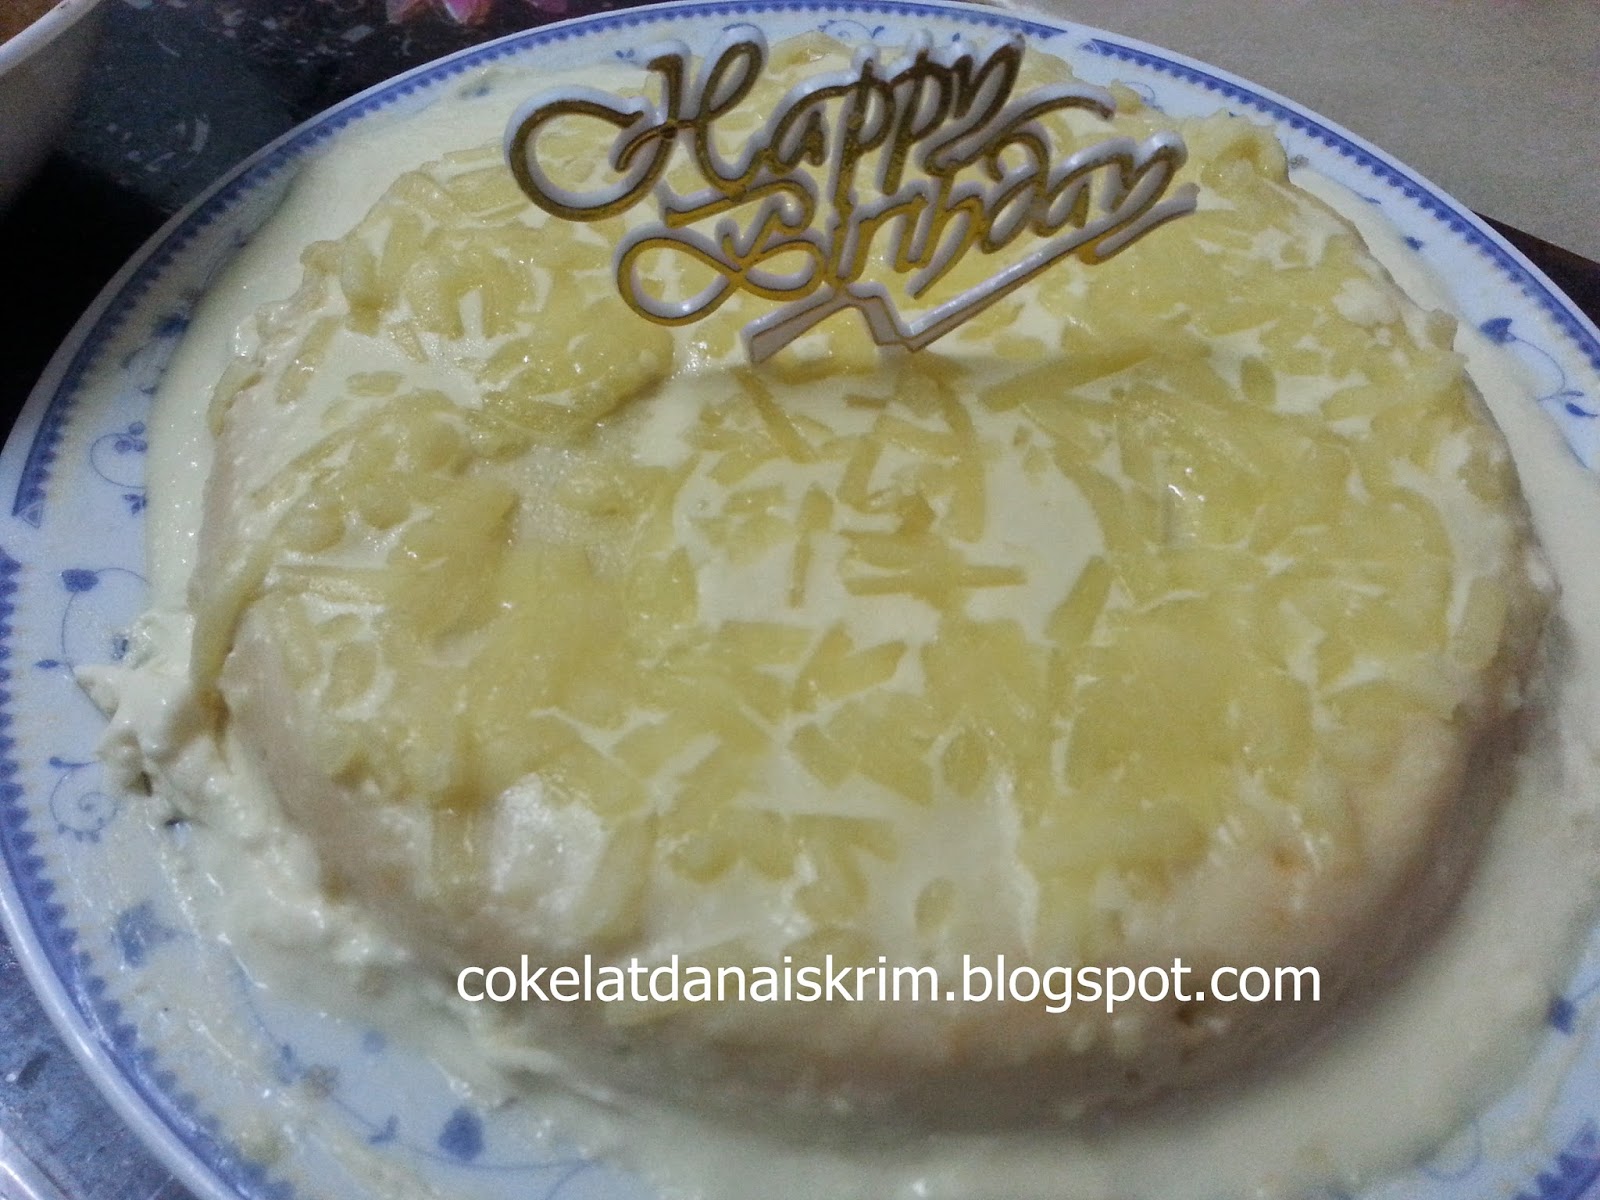 Cikelyana: Resepi kek cheese leleh yang mudah